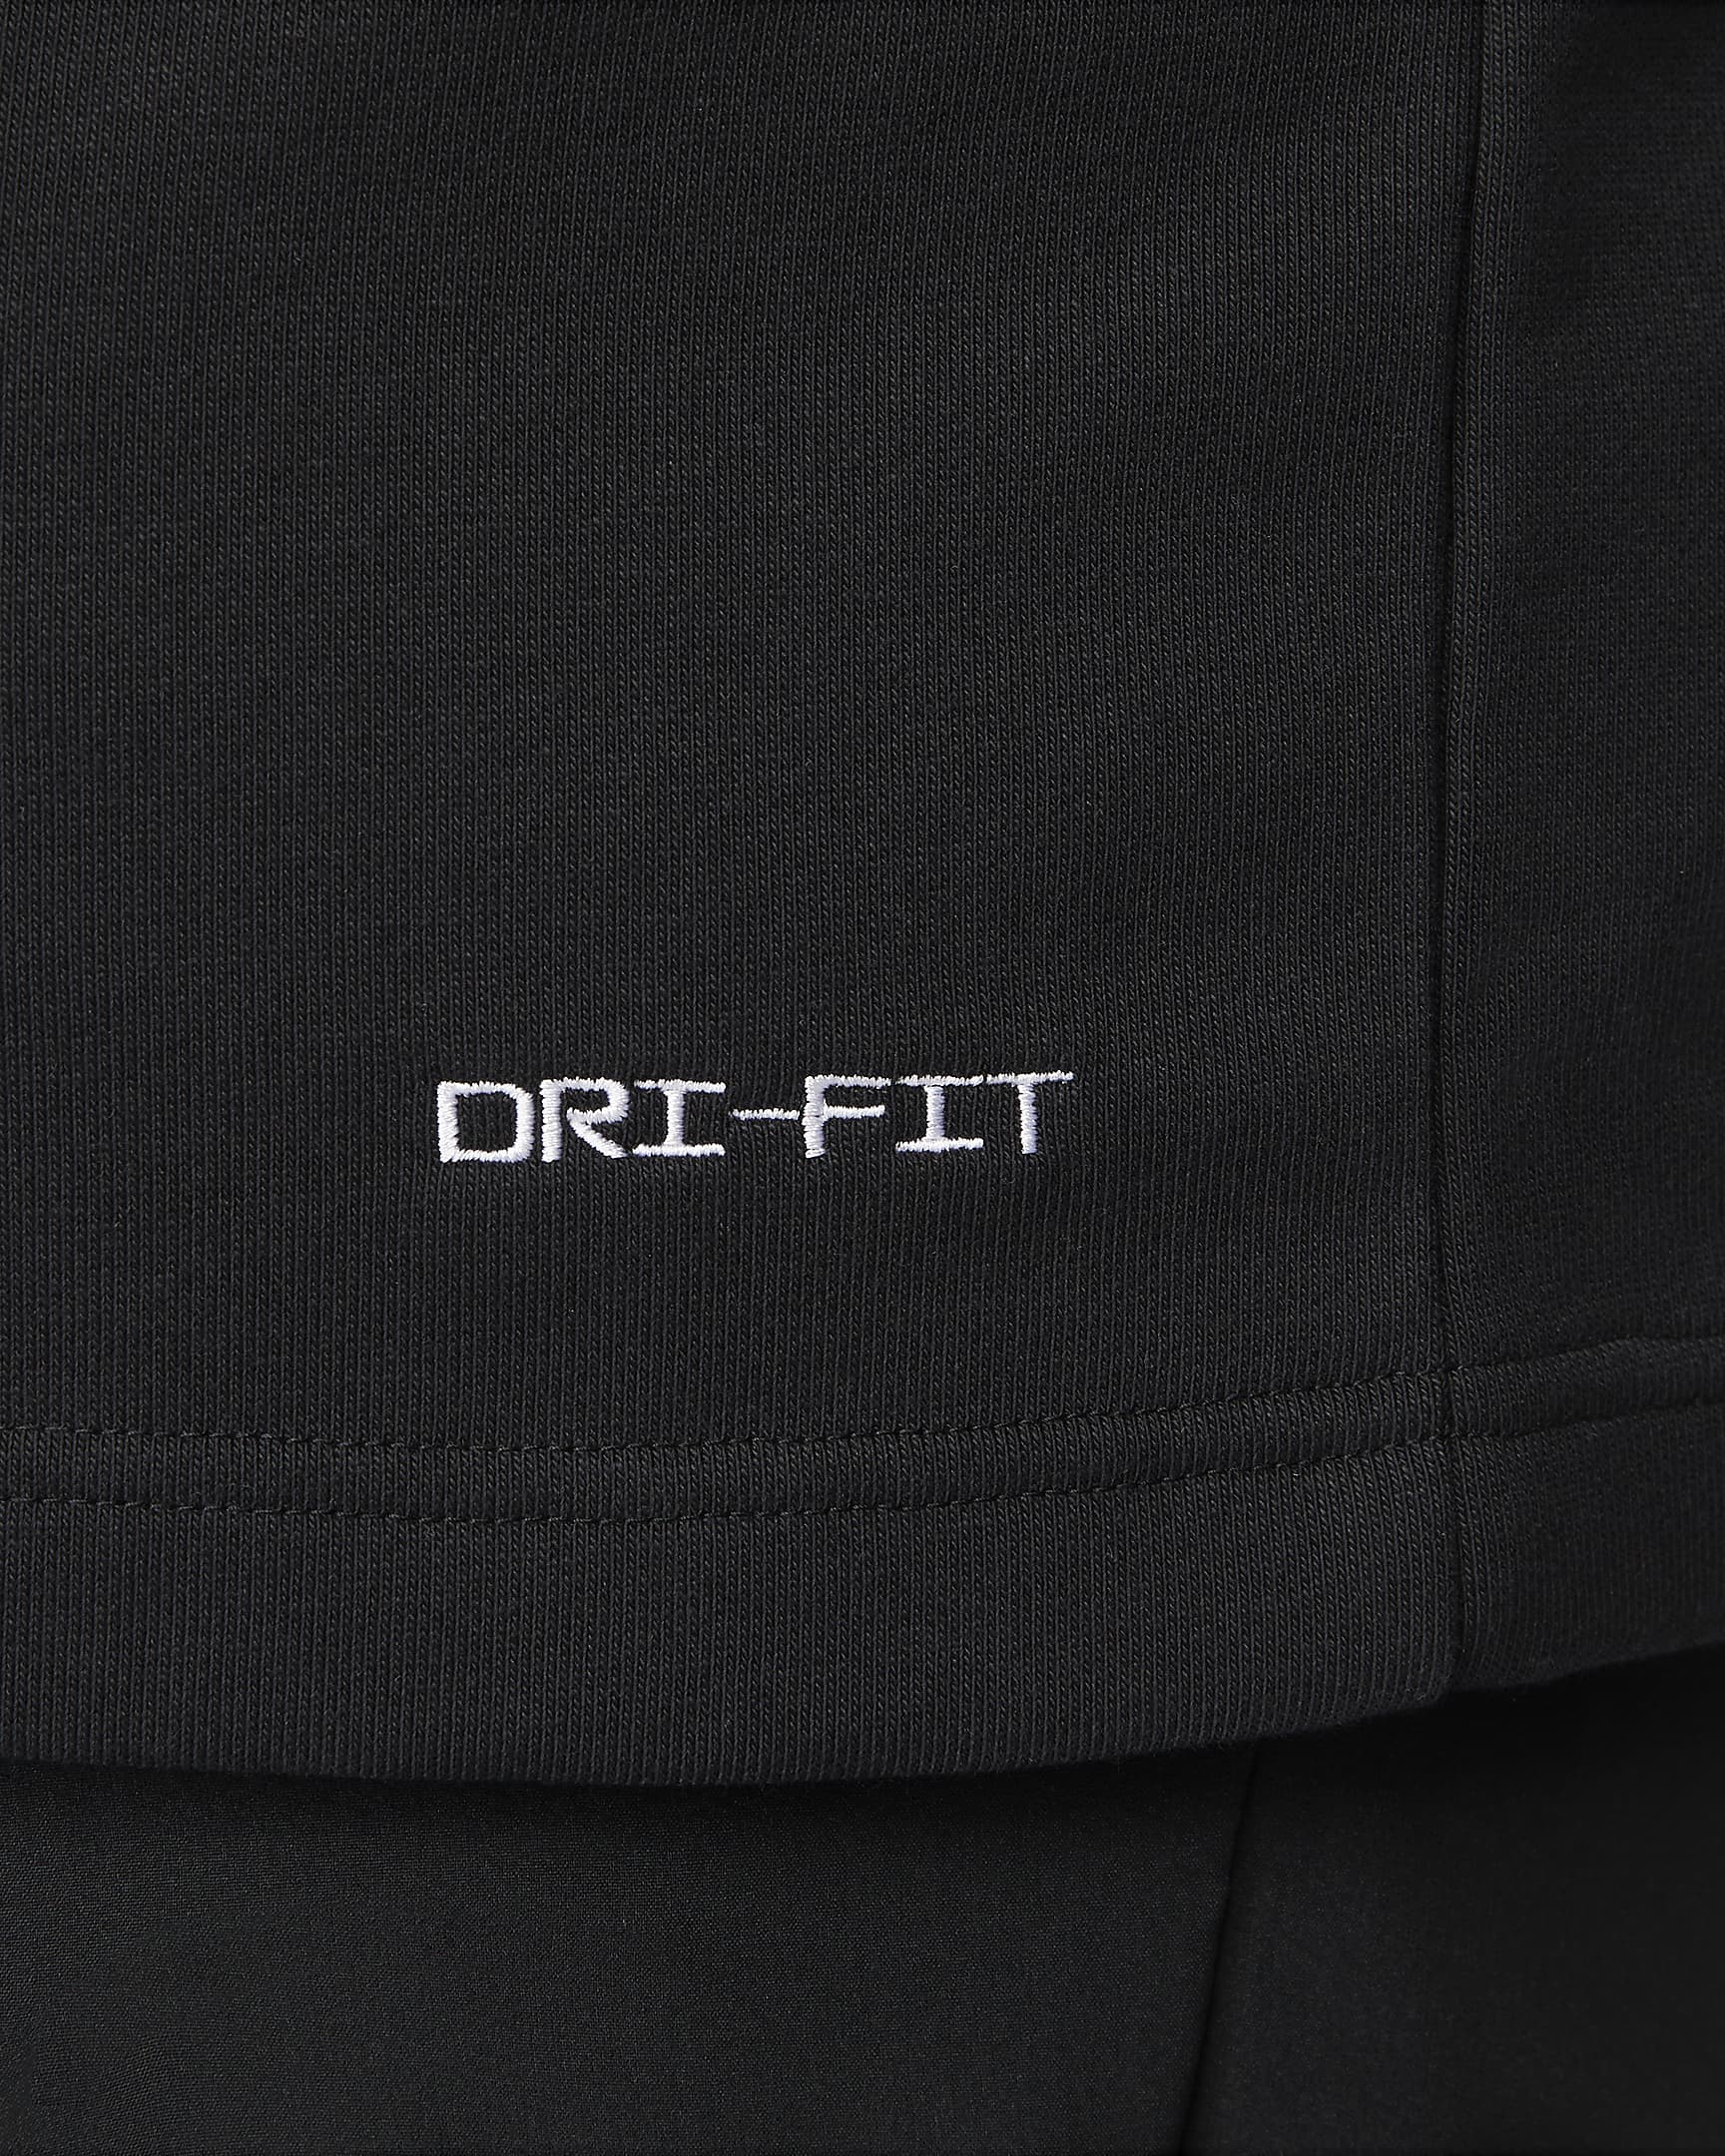 Nike Dri-FIT Standard Issue Men's Golf Cardigan - Black/White